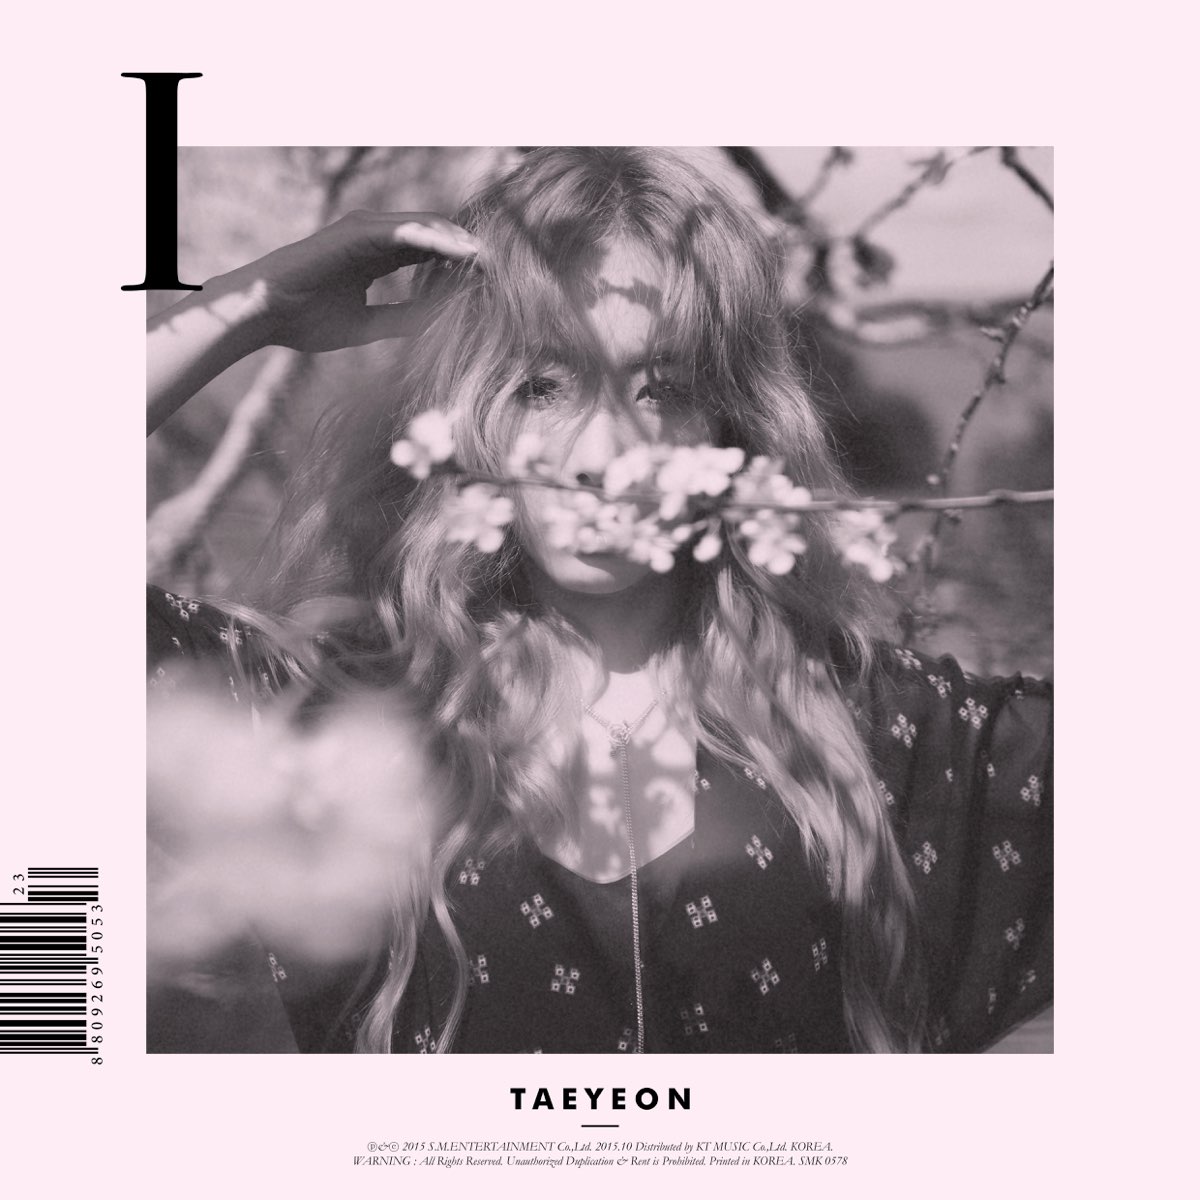 TAEYEON — Stress cover artwork